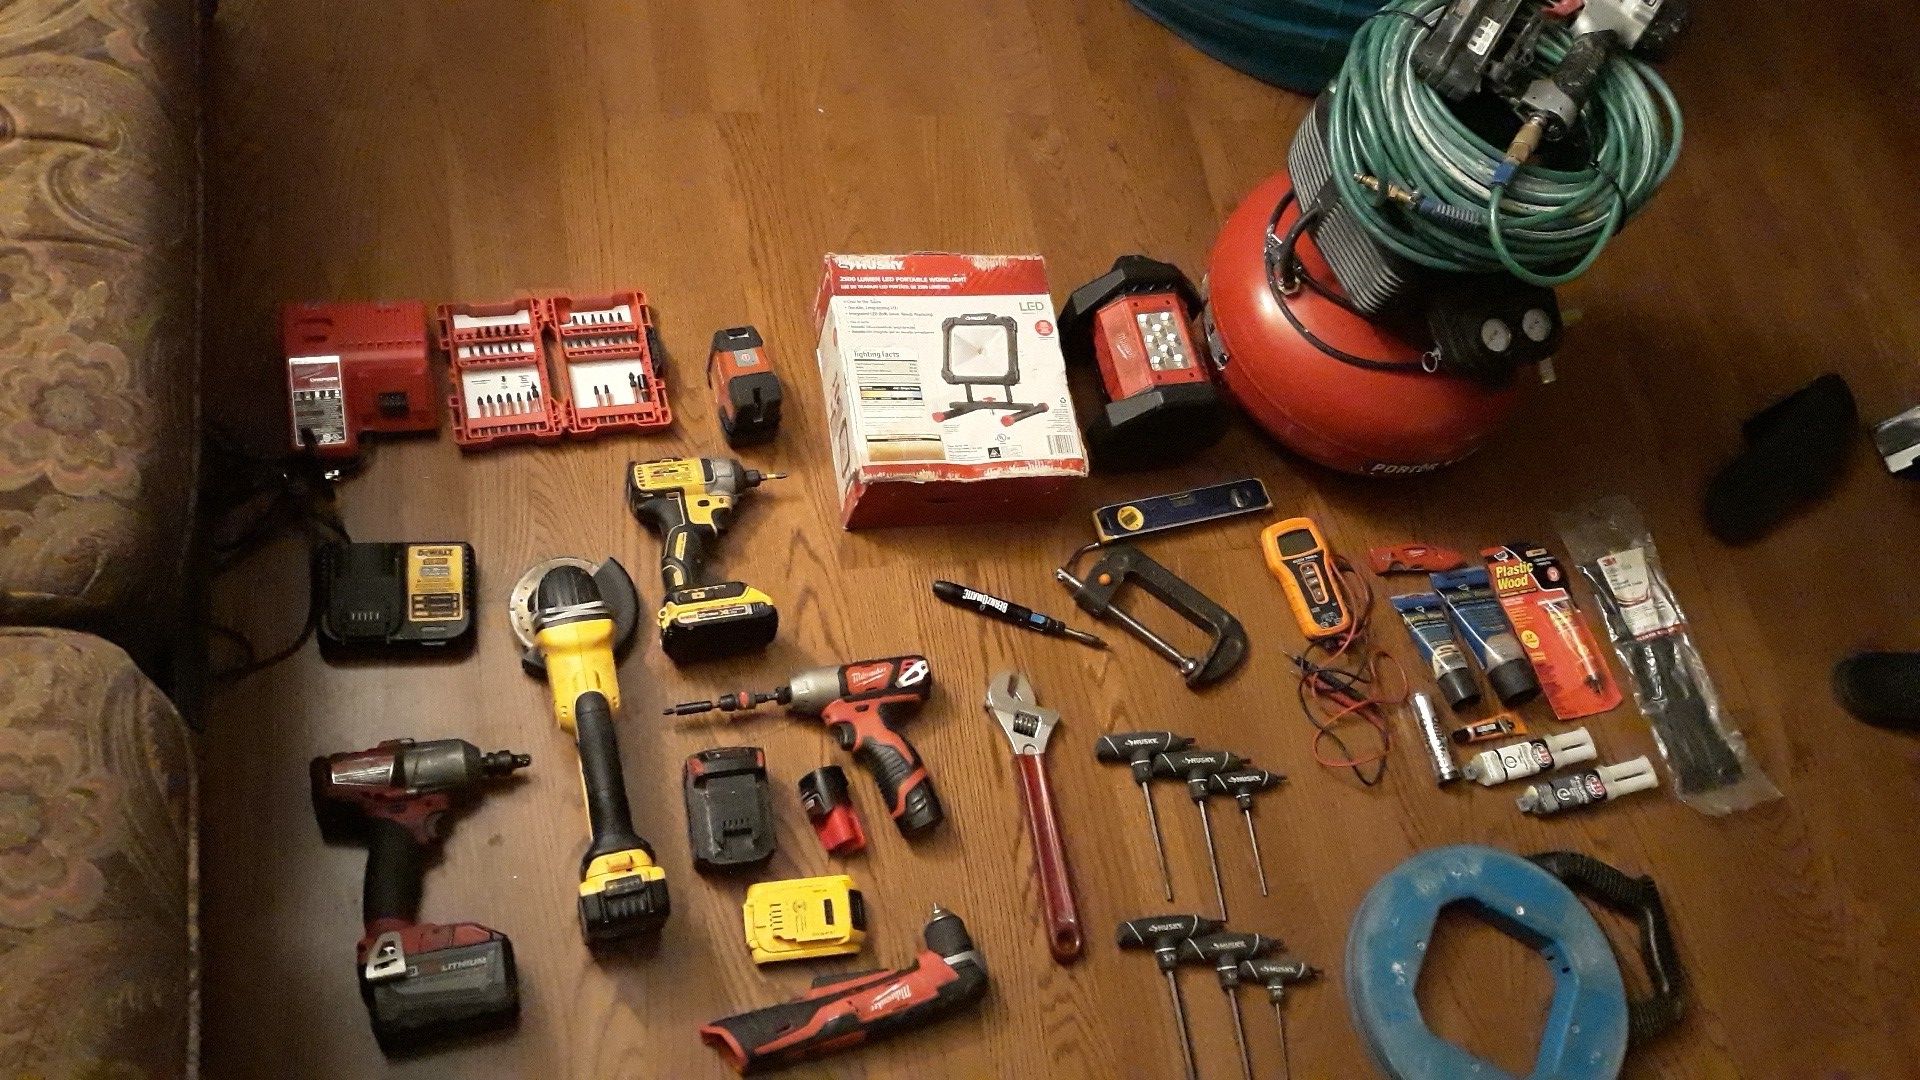 Power tools compresor nail gun and misselenious